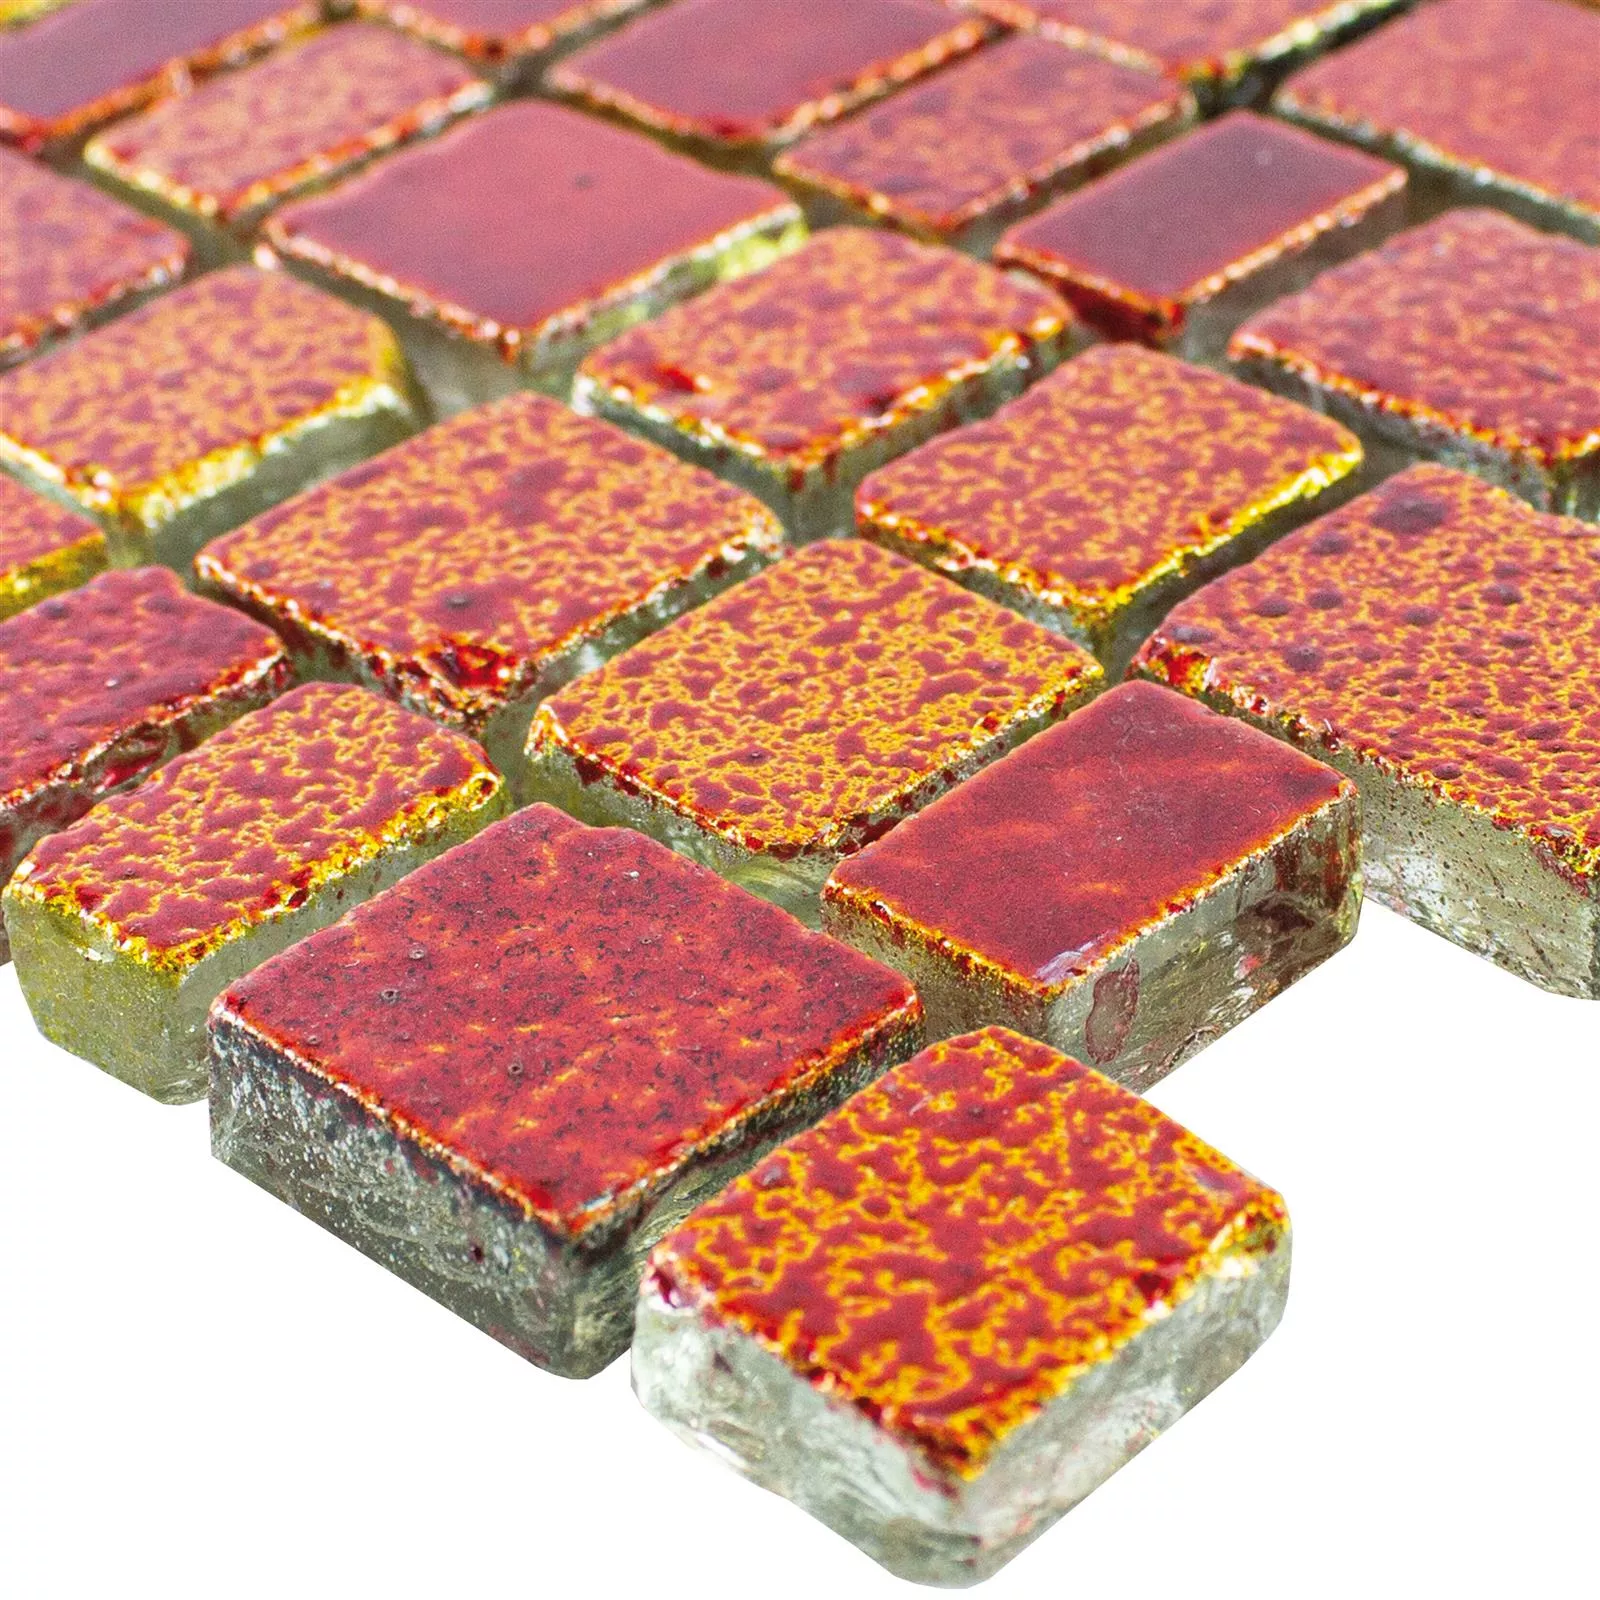 Glass Mosaic Tiles Economy Red Yellow